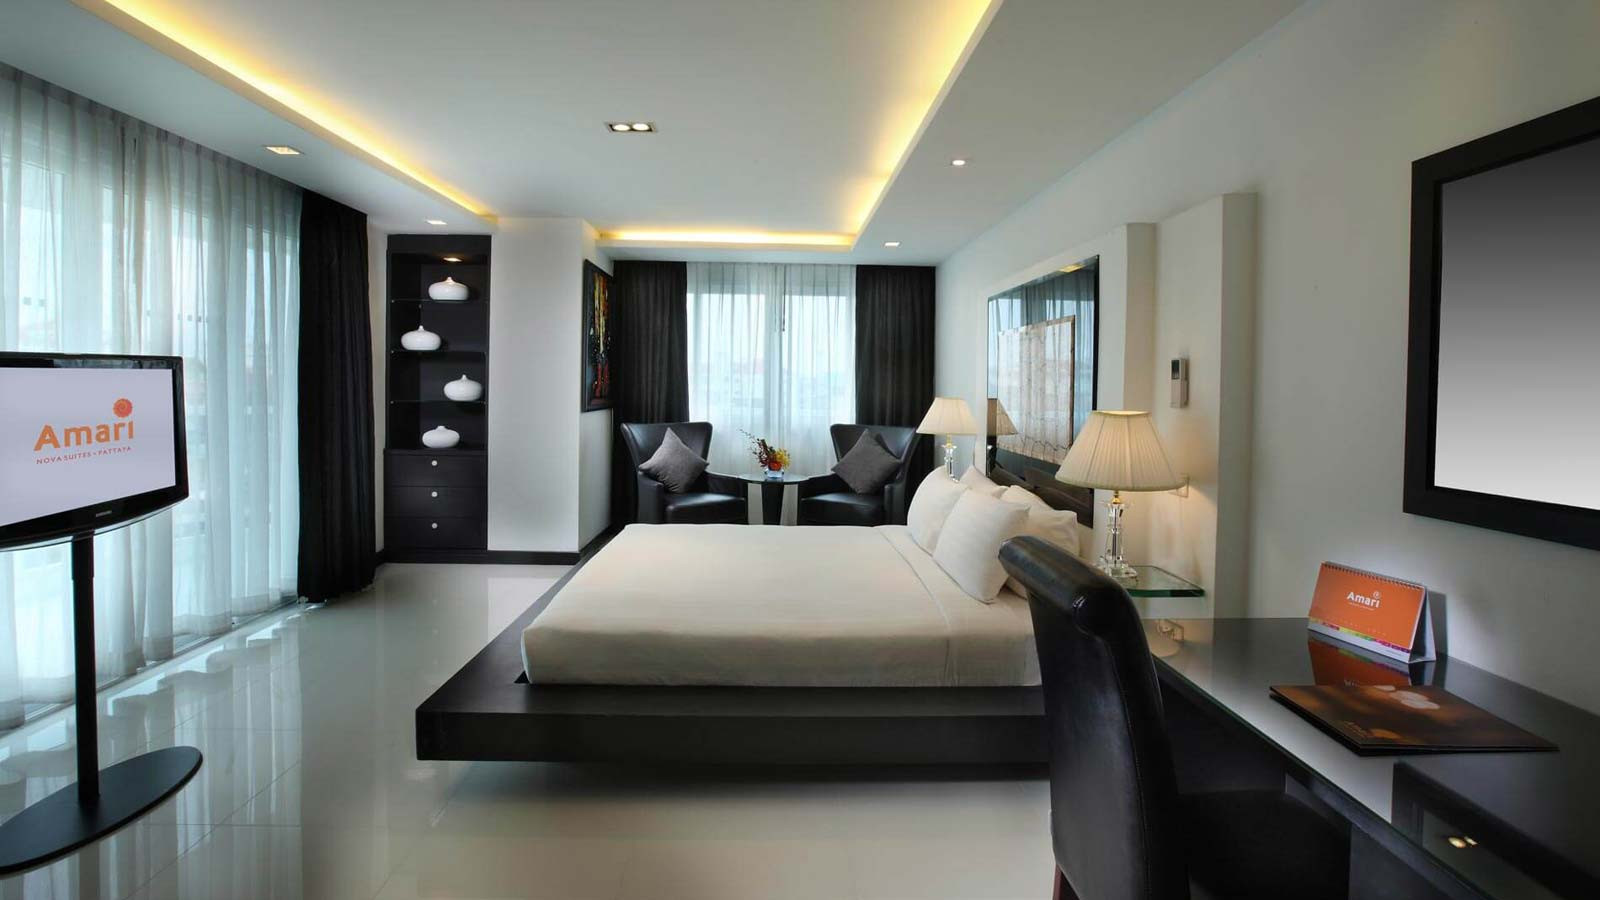 Best ideas about 2 Bedroom Suites
. Save or Pin Two Bedroom Suite Amari Nova Suites Pattaya Now.